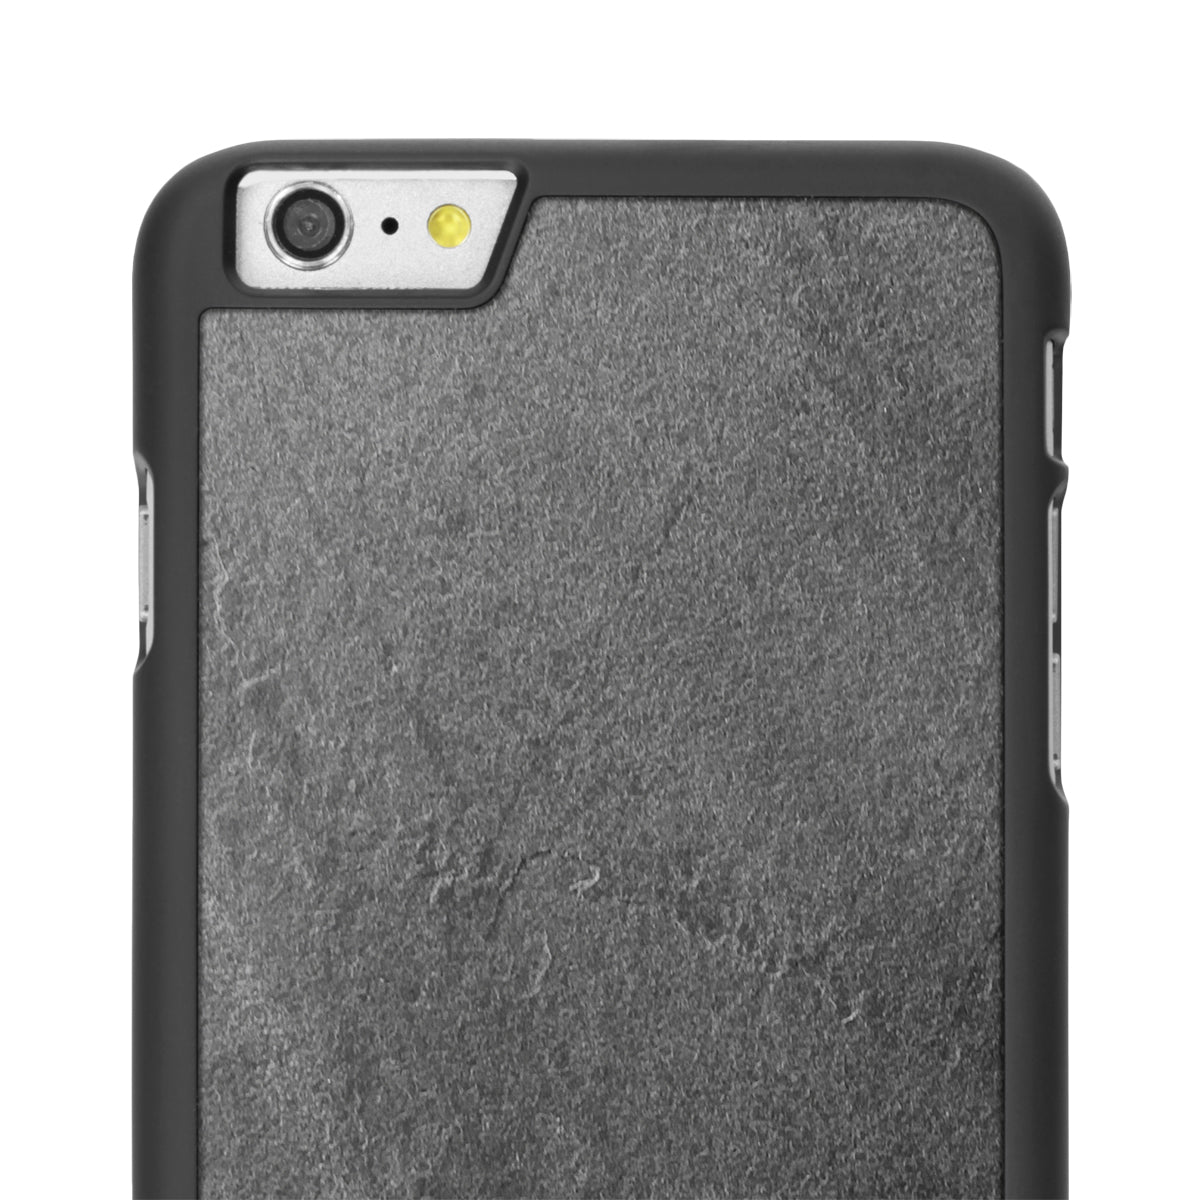 iPhone 6/6s Plus —  Stone Snap Case